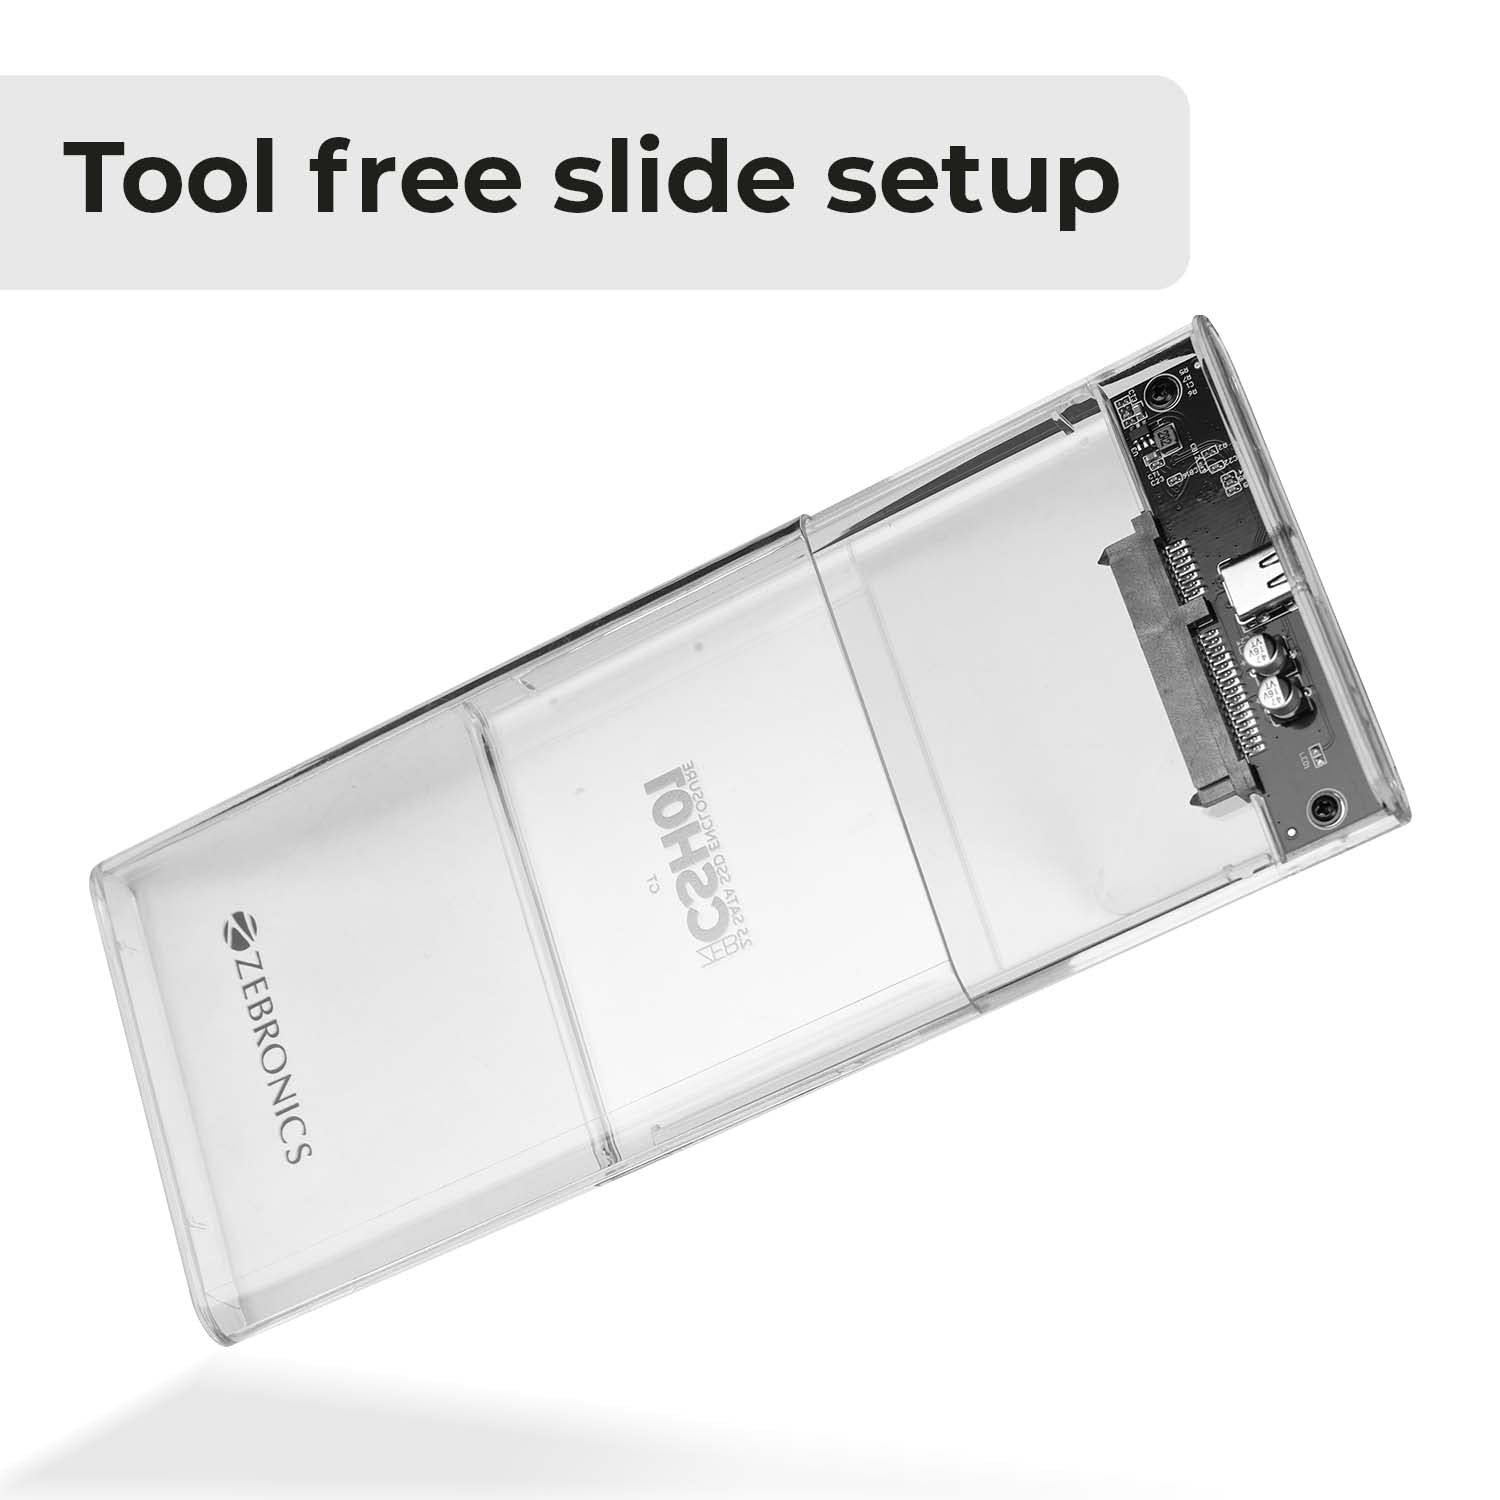 ZEBRONICS CSH01 2.5 SATA SSD Enclosure with Transparent case, Type C 3.1, Upto 5 gbps* and Upto 6TB Max Storage Capacity